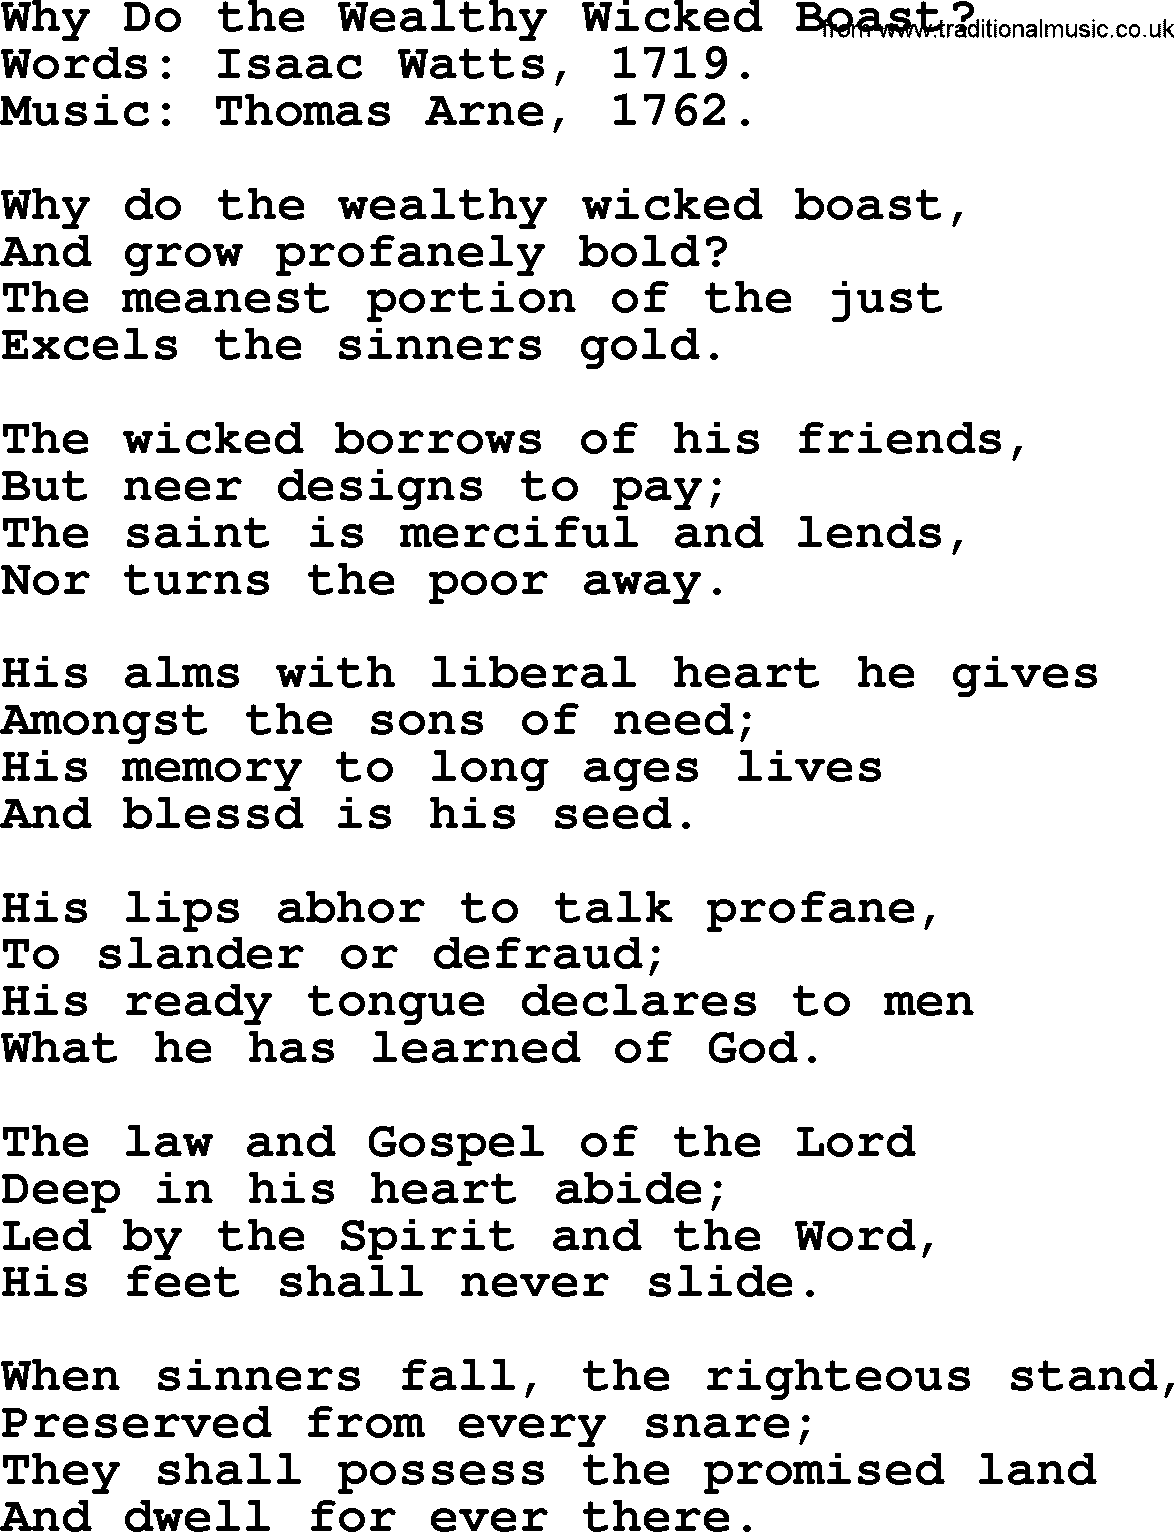 Isaac Watts Christian hymn: Why Do the Wealthy Wicked Boast_- lyricss